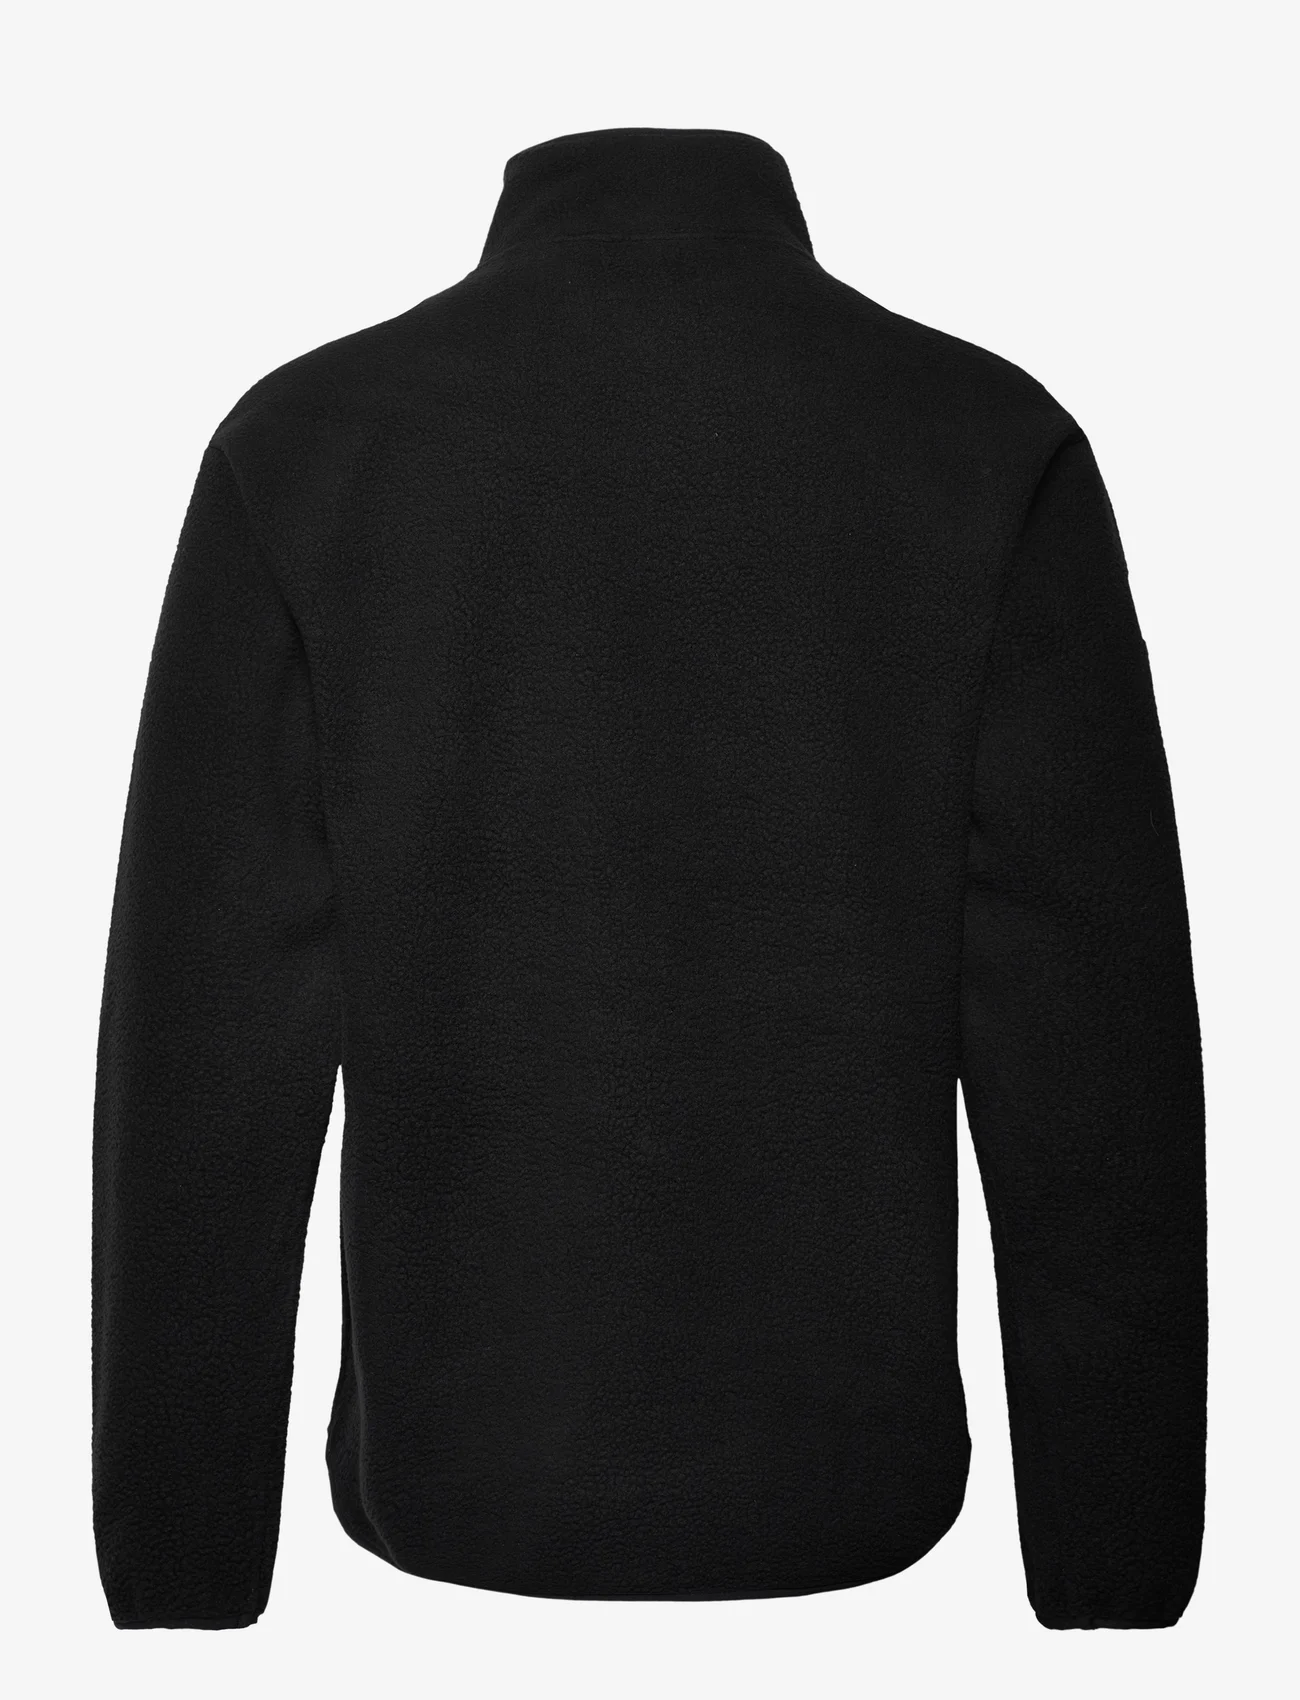 Tenson - Yoke Halfzip - mid layer jackets - black - 1